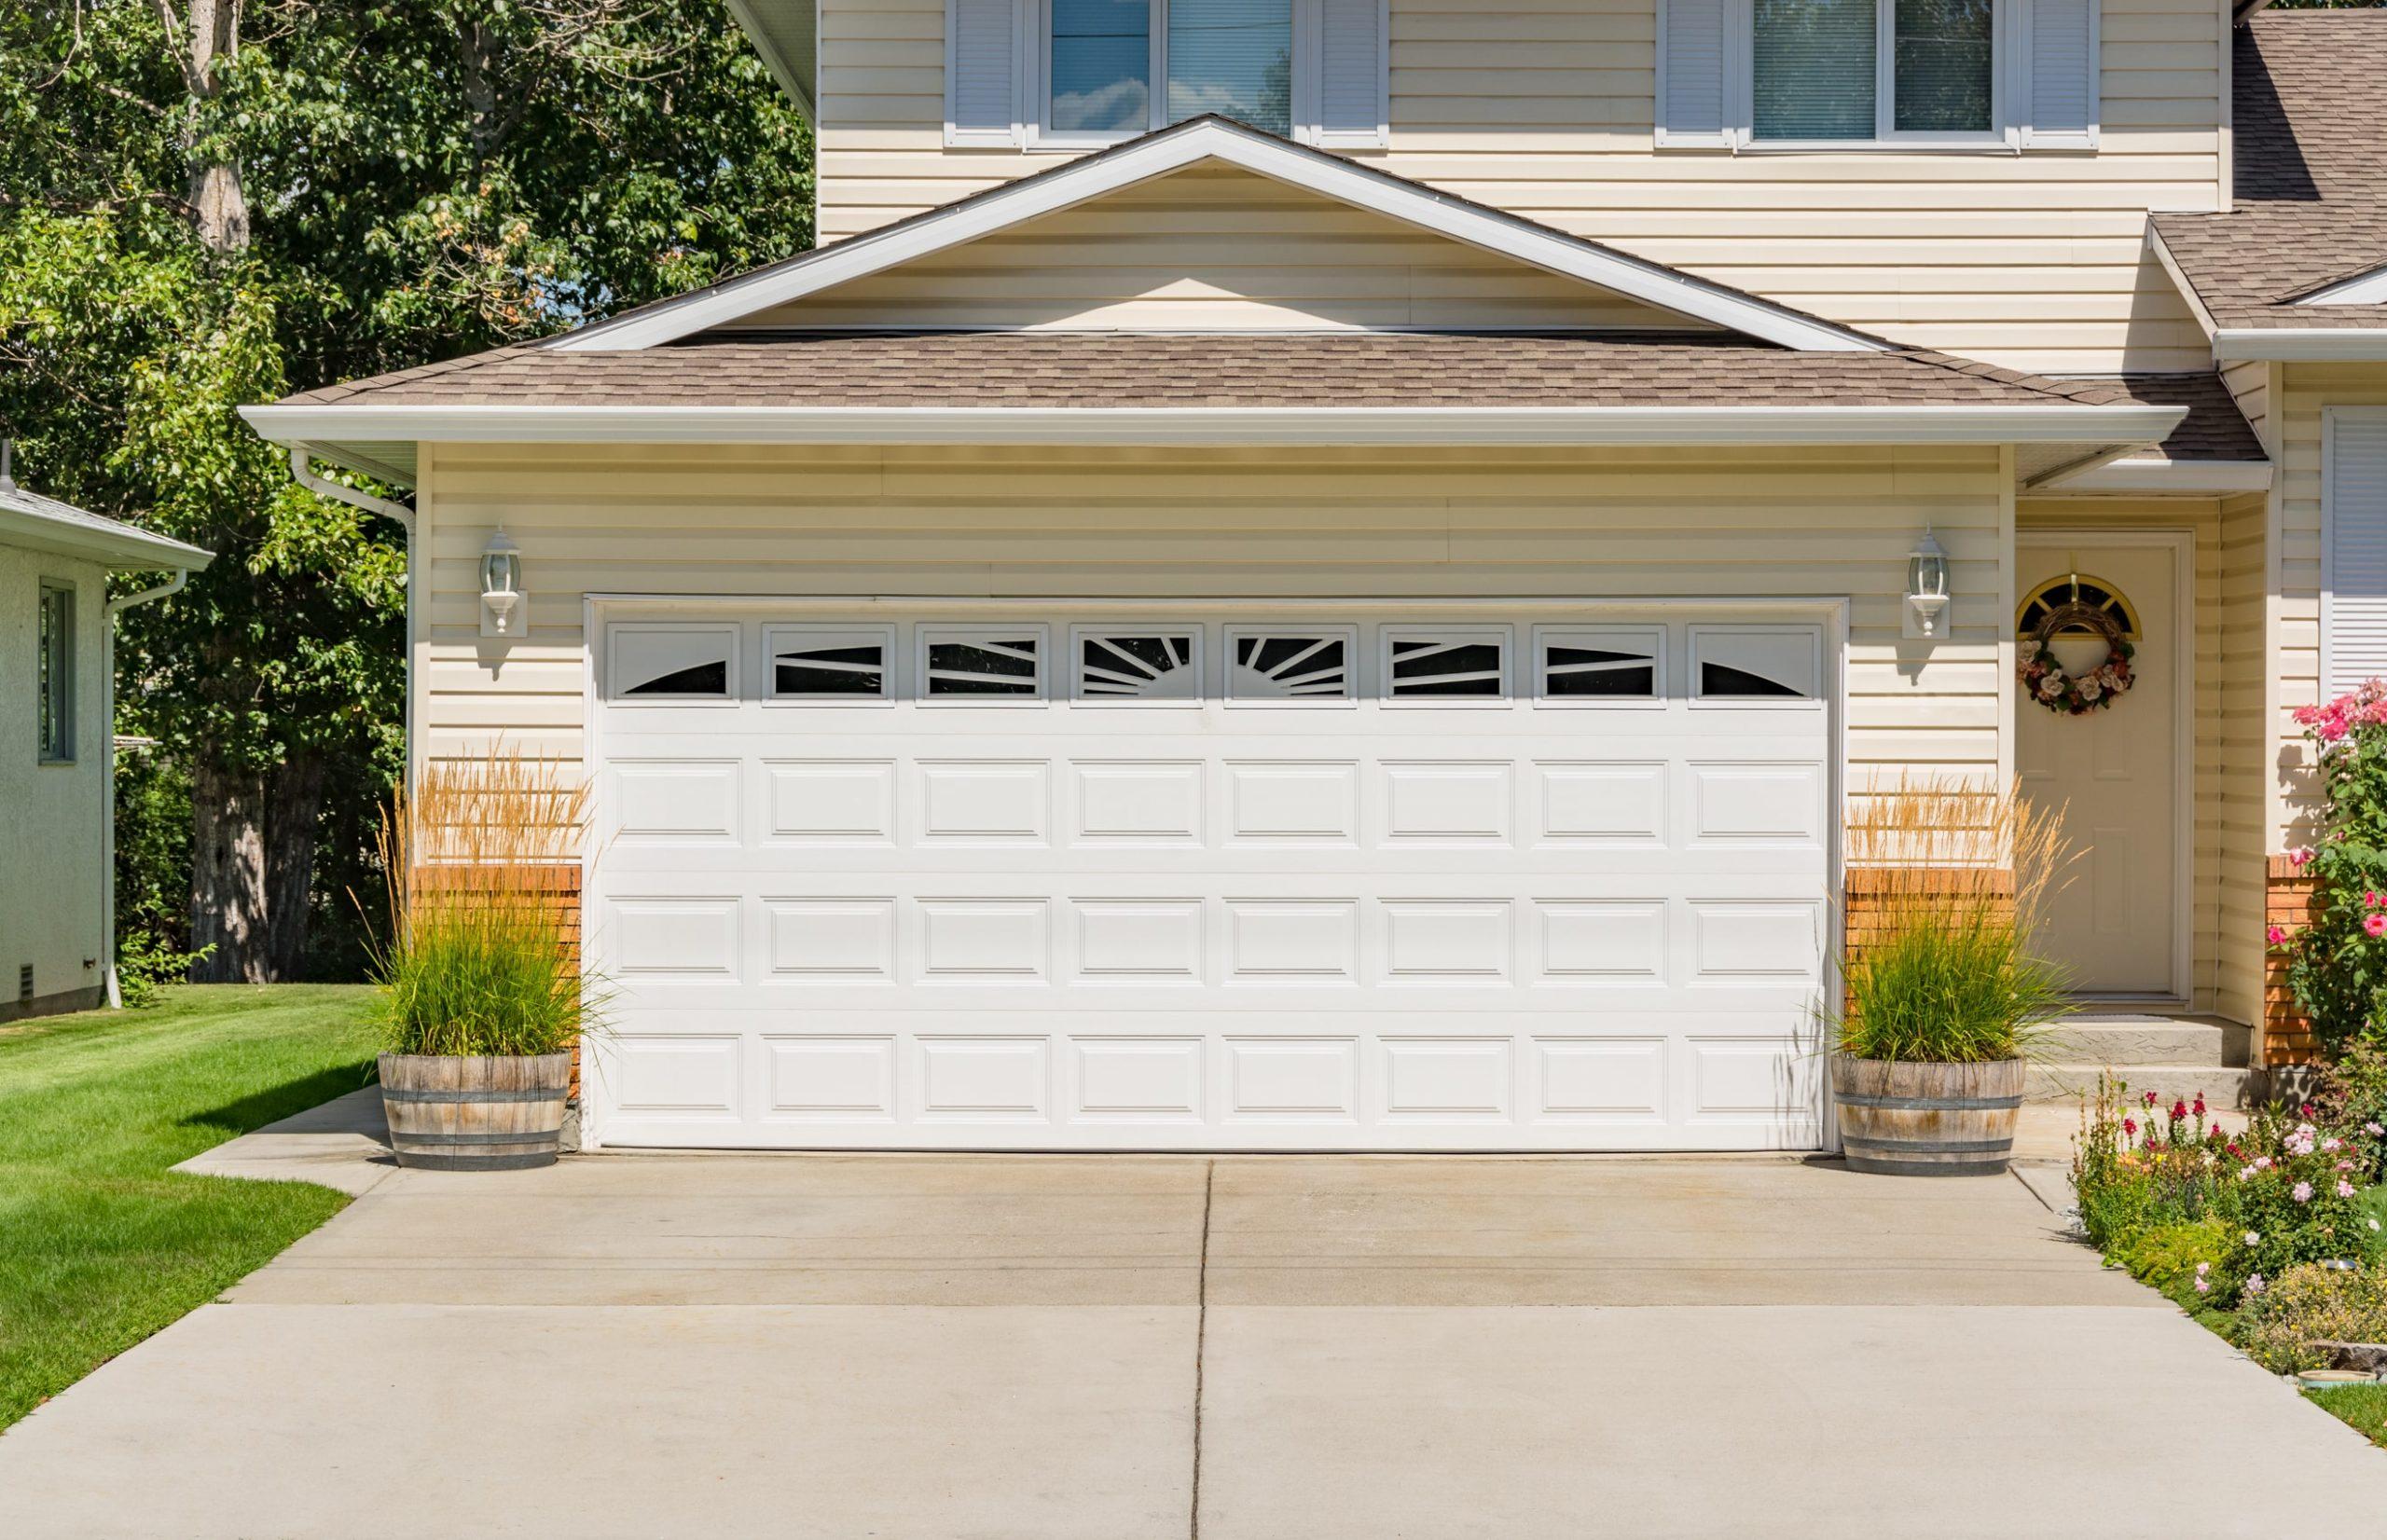 Residential Garage Door Repair Services | Residential Garage Door Replacement Services